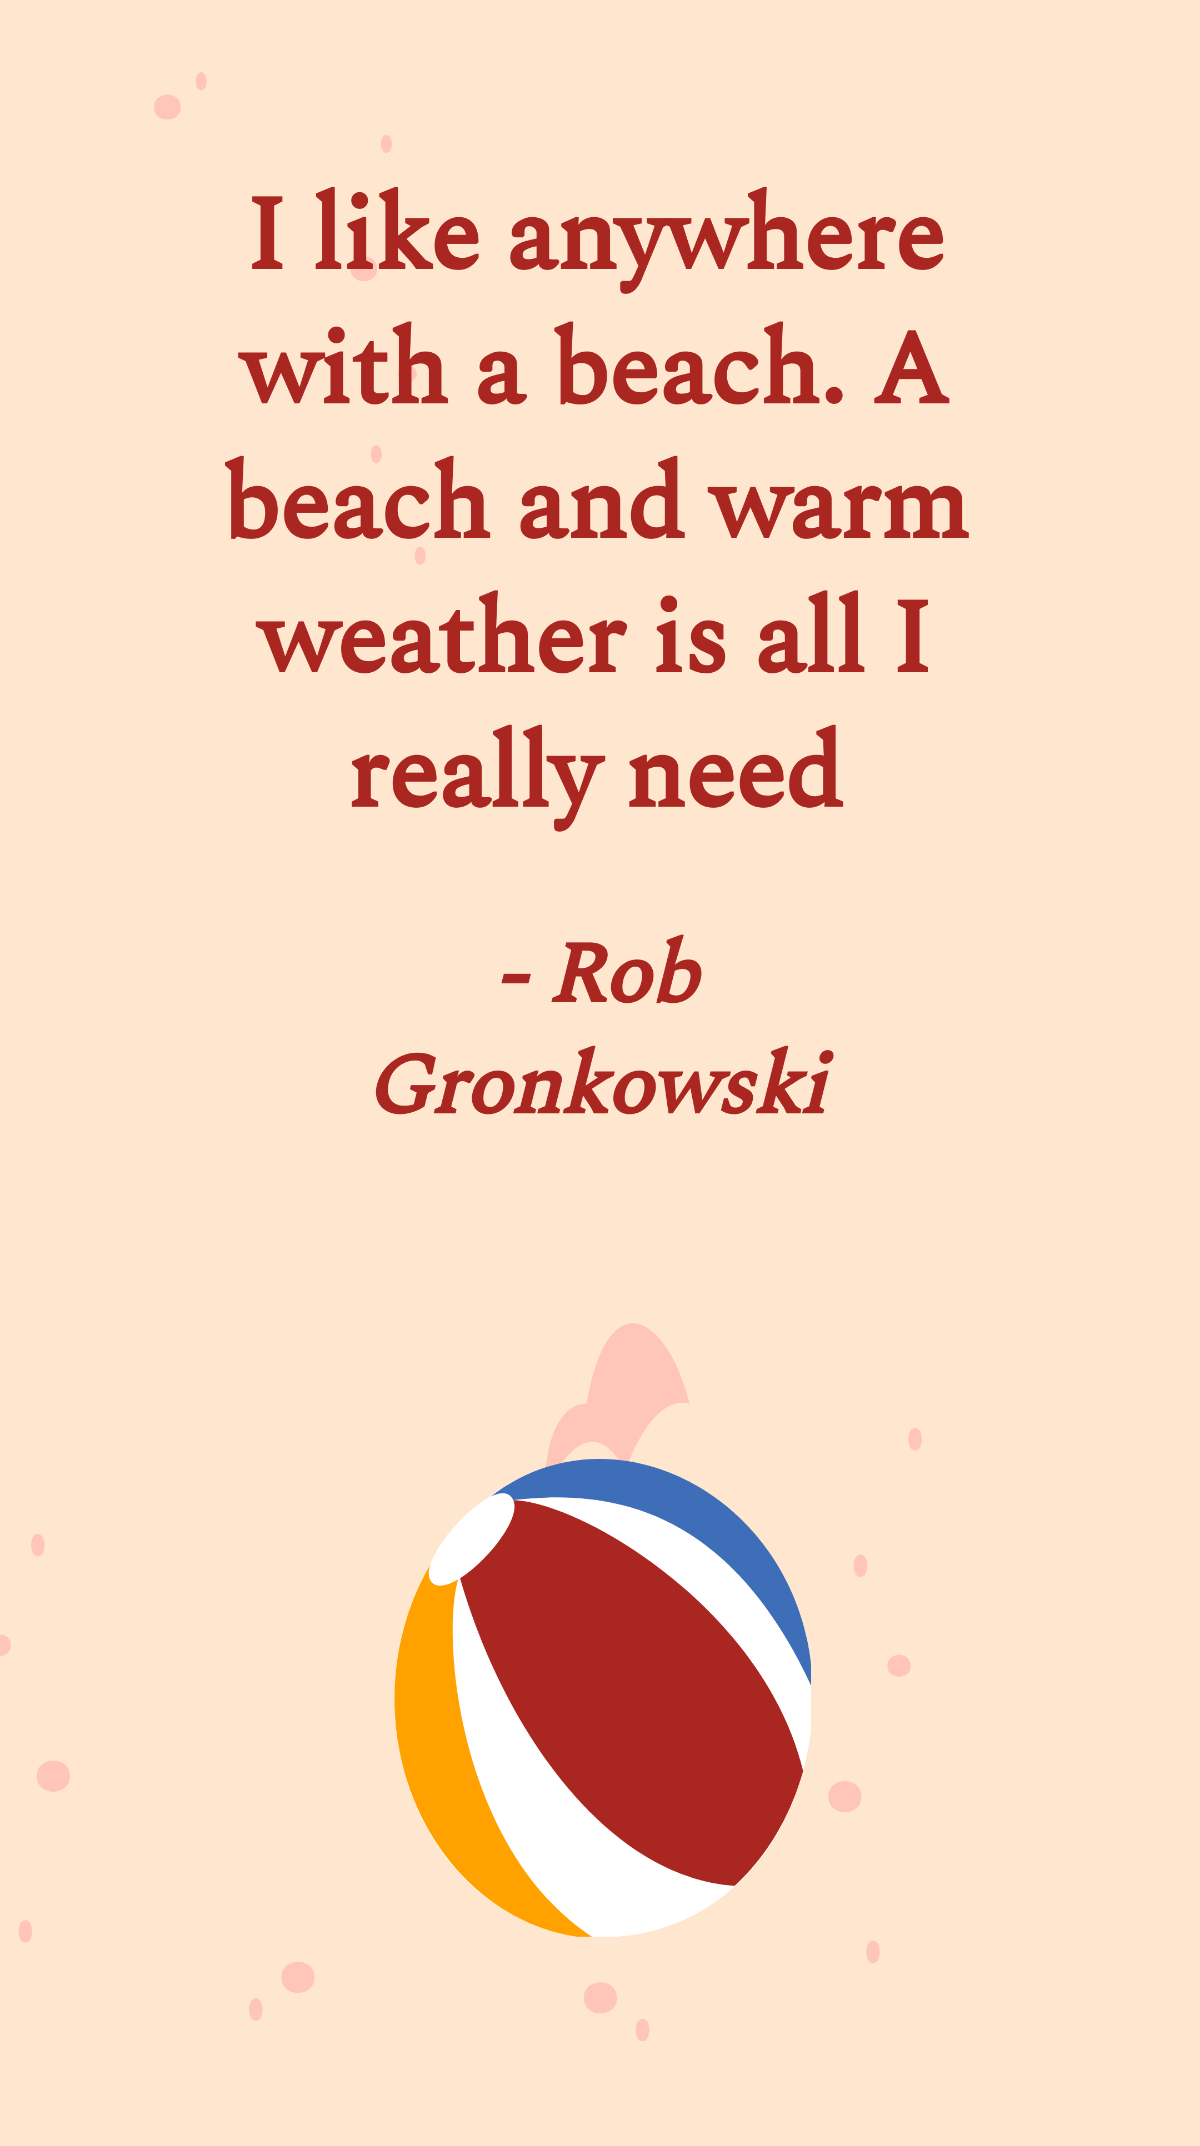 Rob Gronkowski - I like anywhere with a beach. A beach and warm weather is all I really need Template